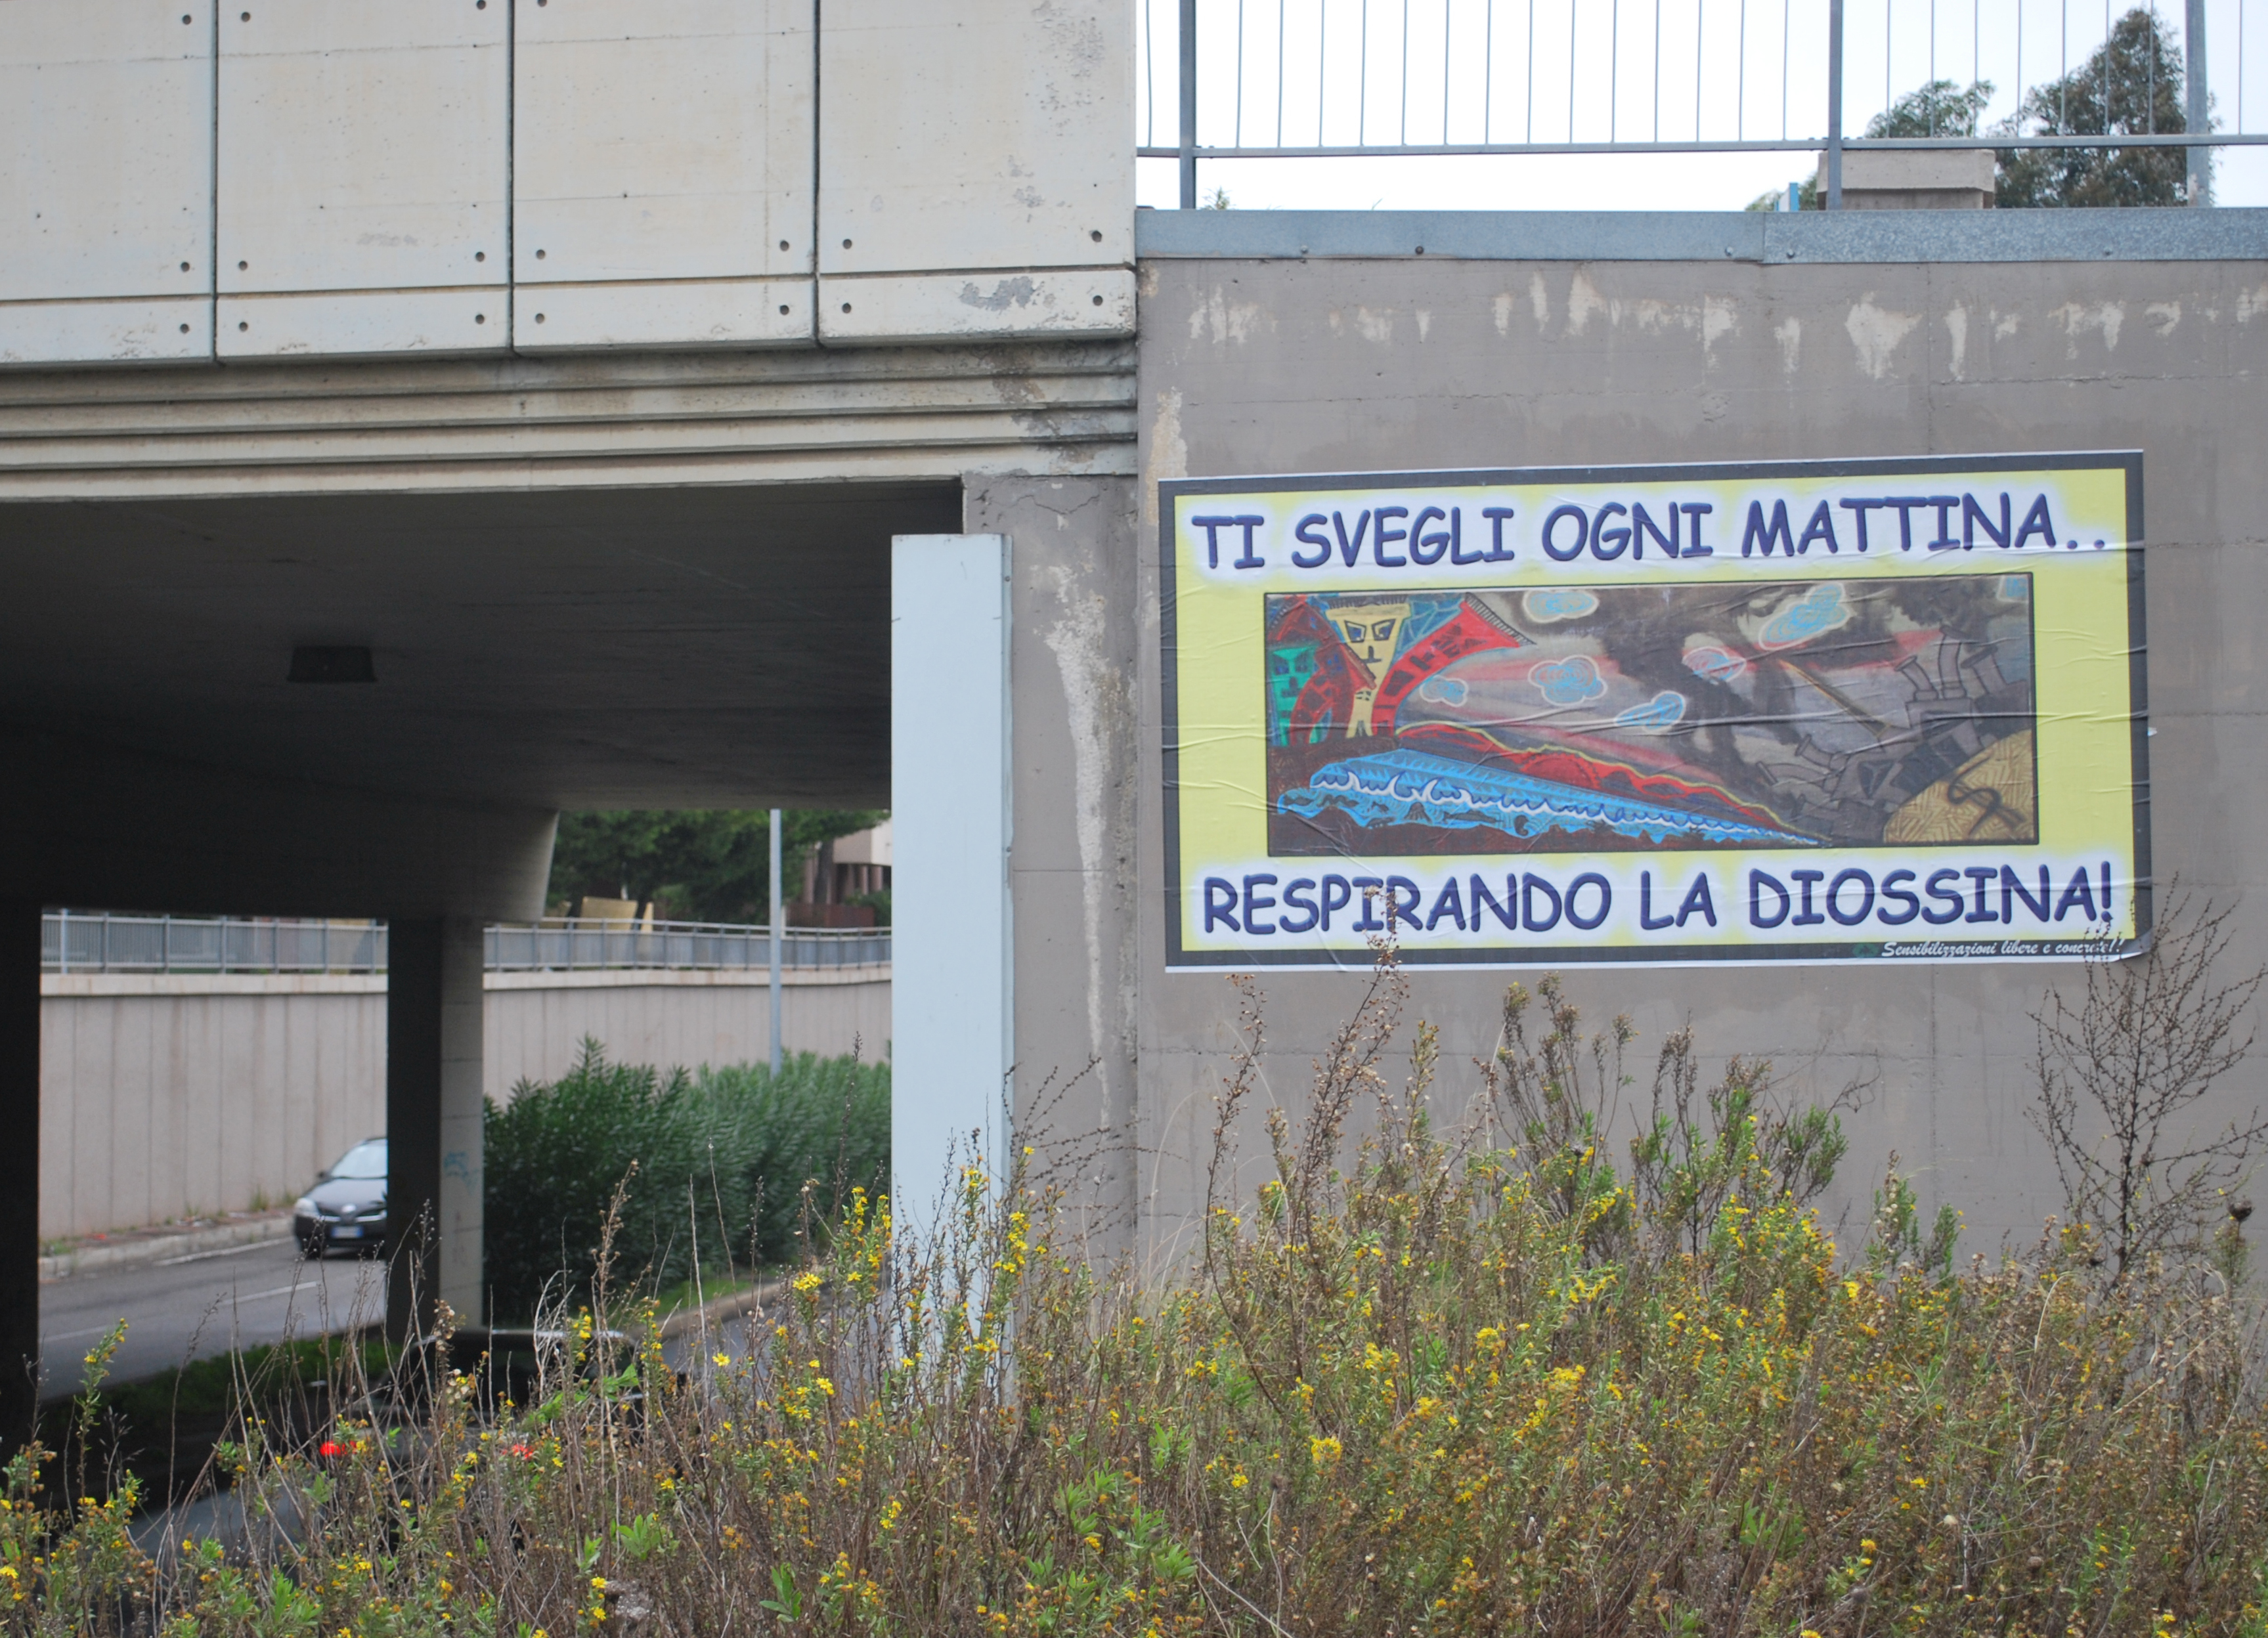 Graffiti antinquinamento a Taranto